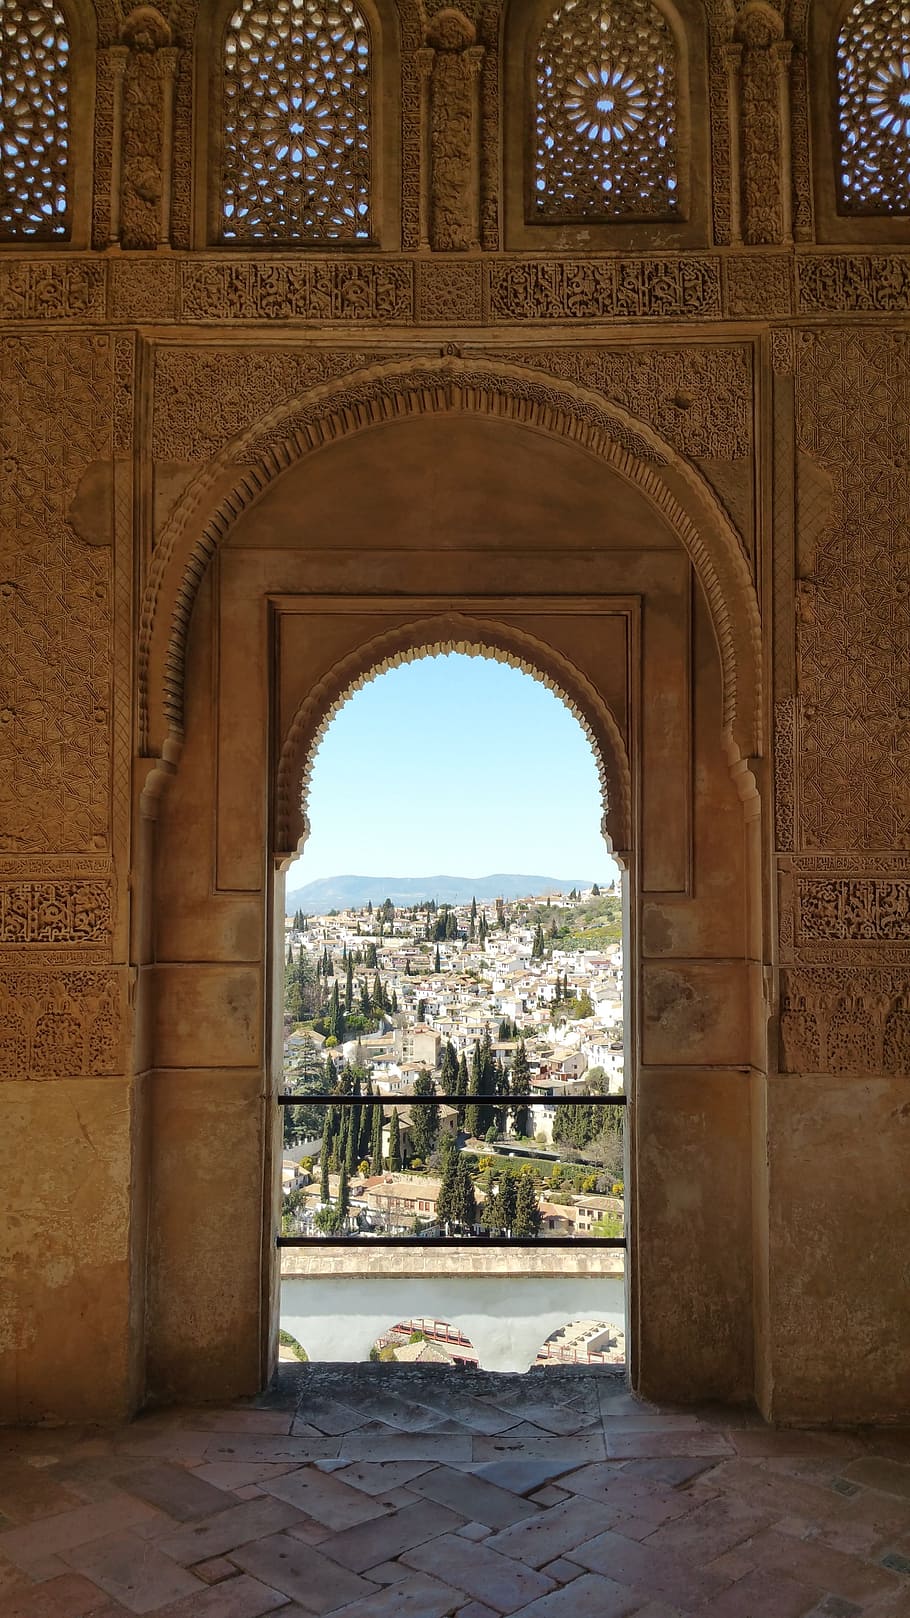 Alhambra, Alhamra, Granada, calat alhamra, fortress, royal